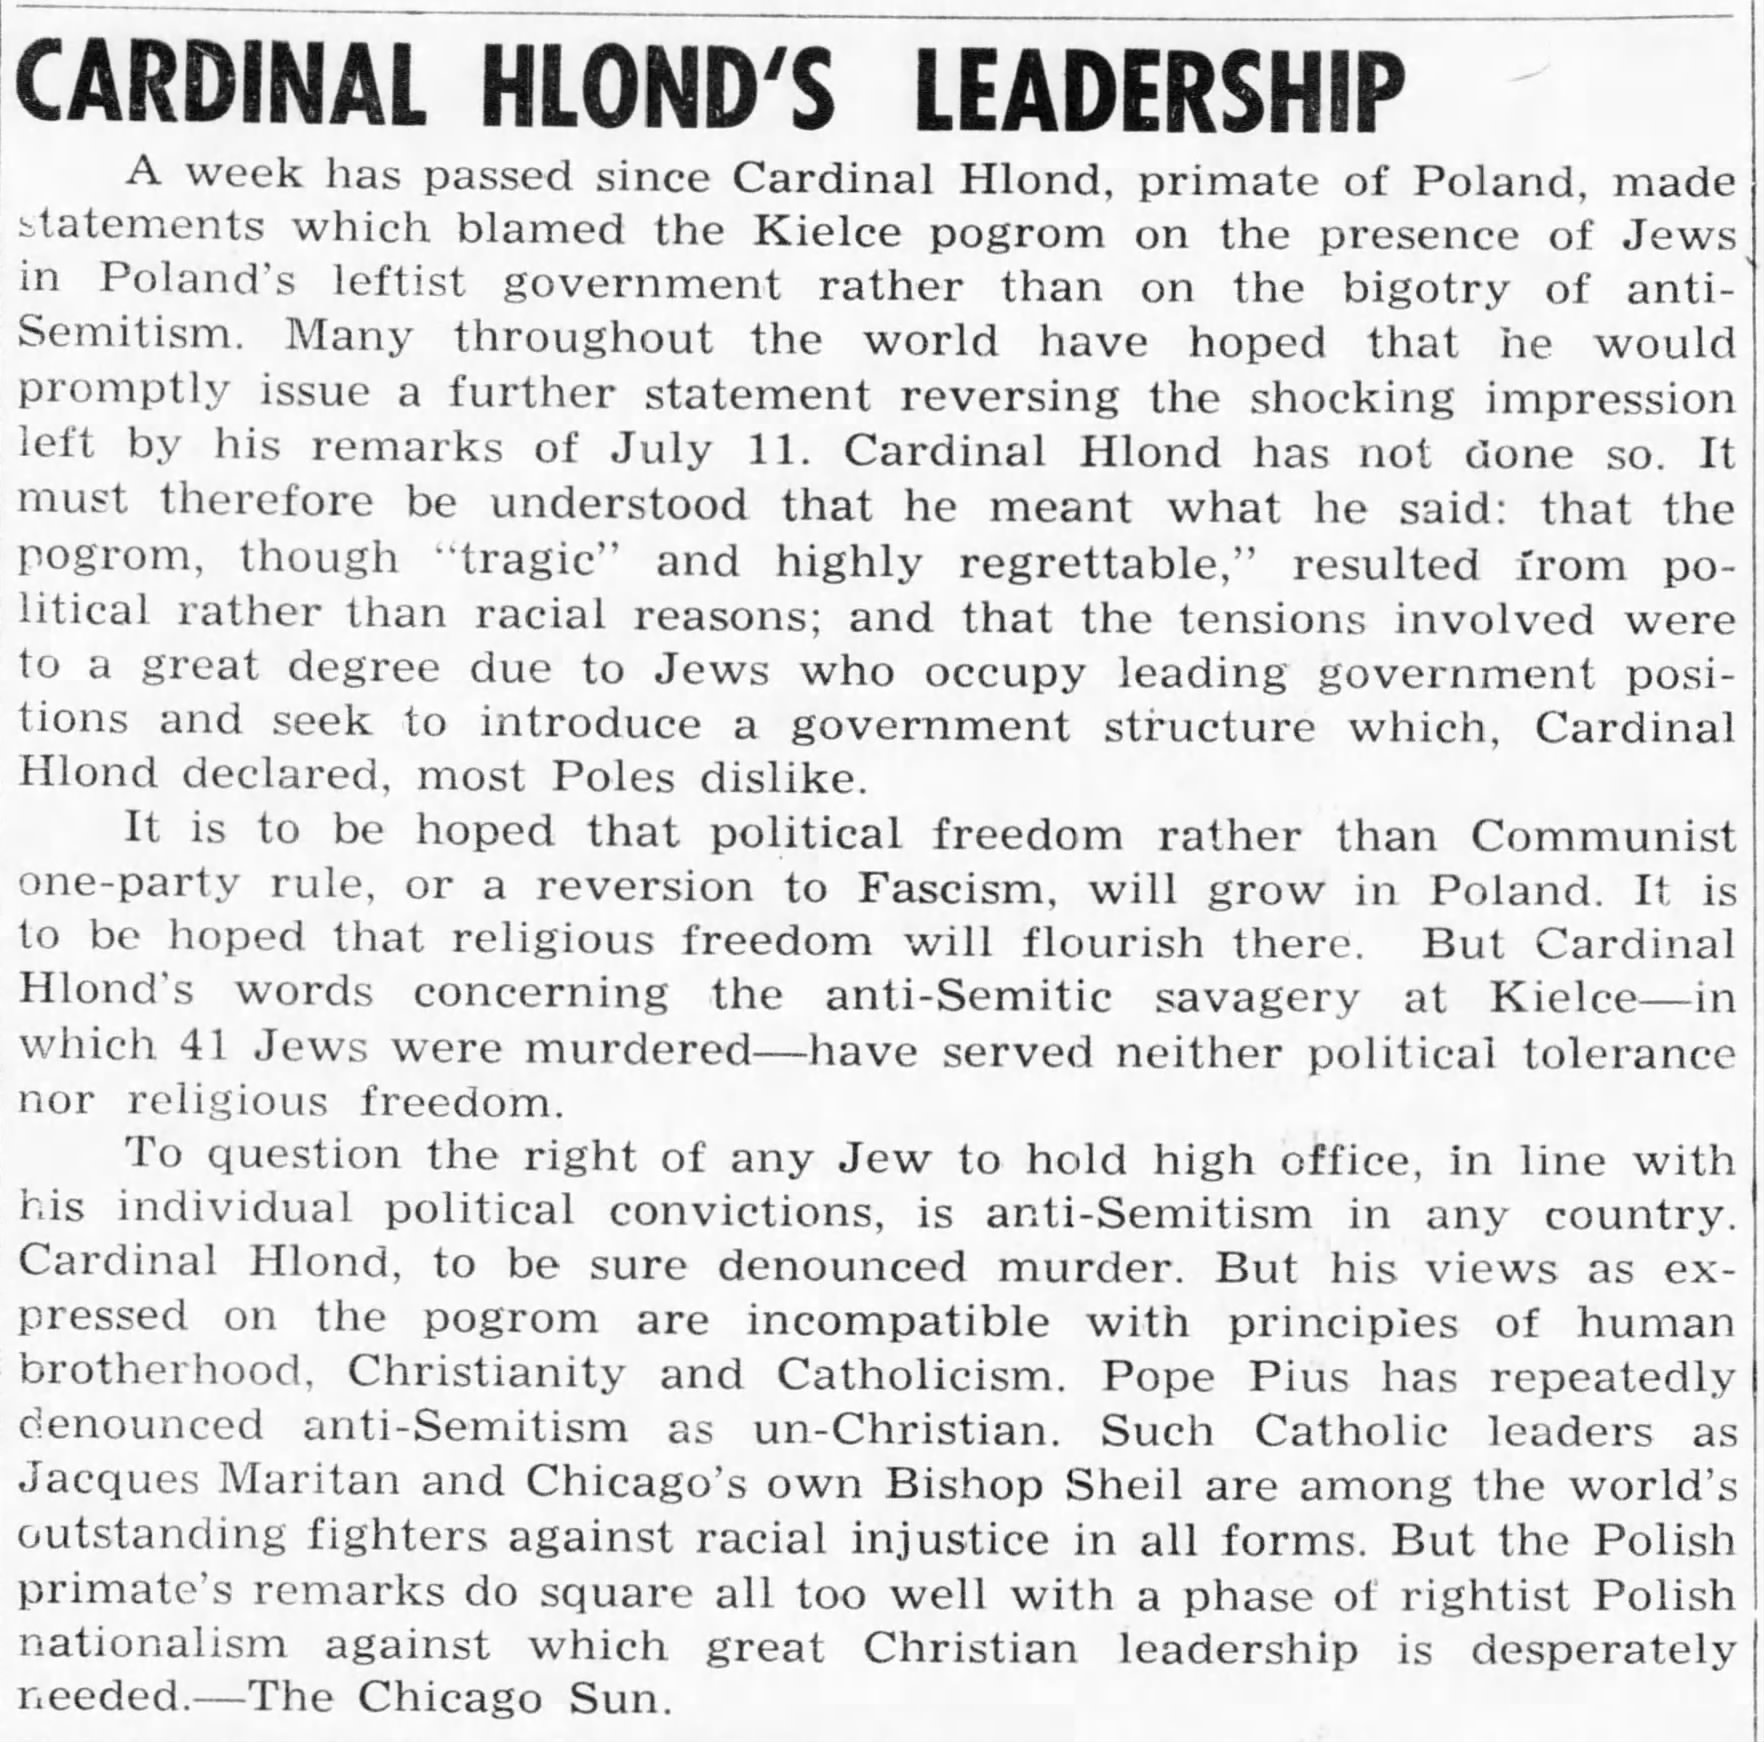 Cardinal Hlond's Leadership